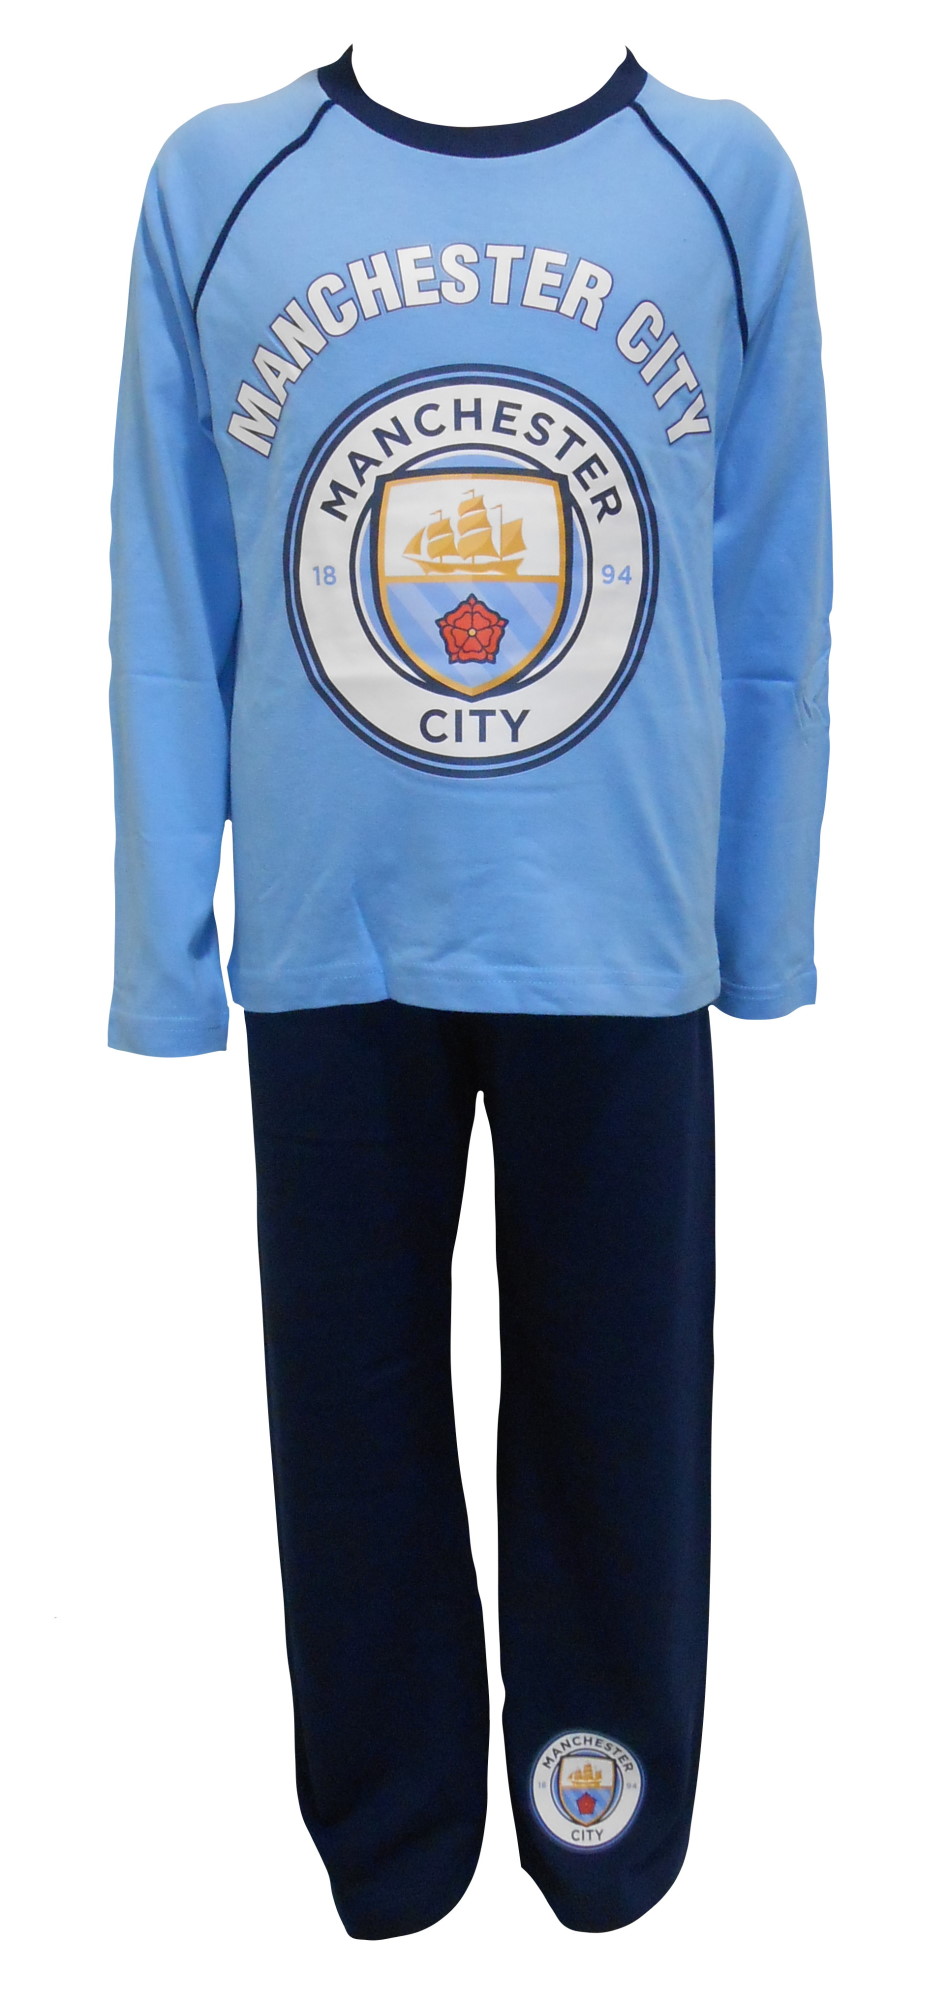 PF20 Manchester City Pyjamas.JPG  by Thingimijigs